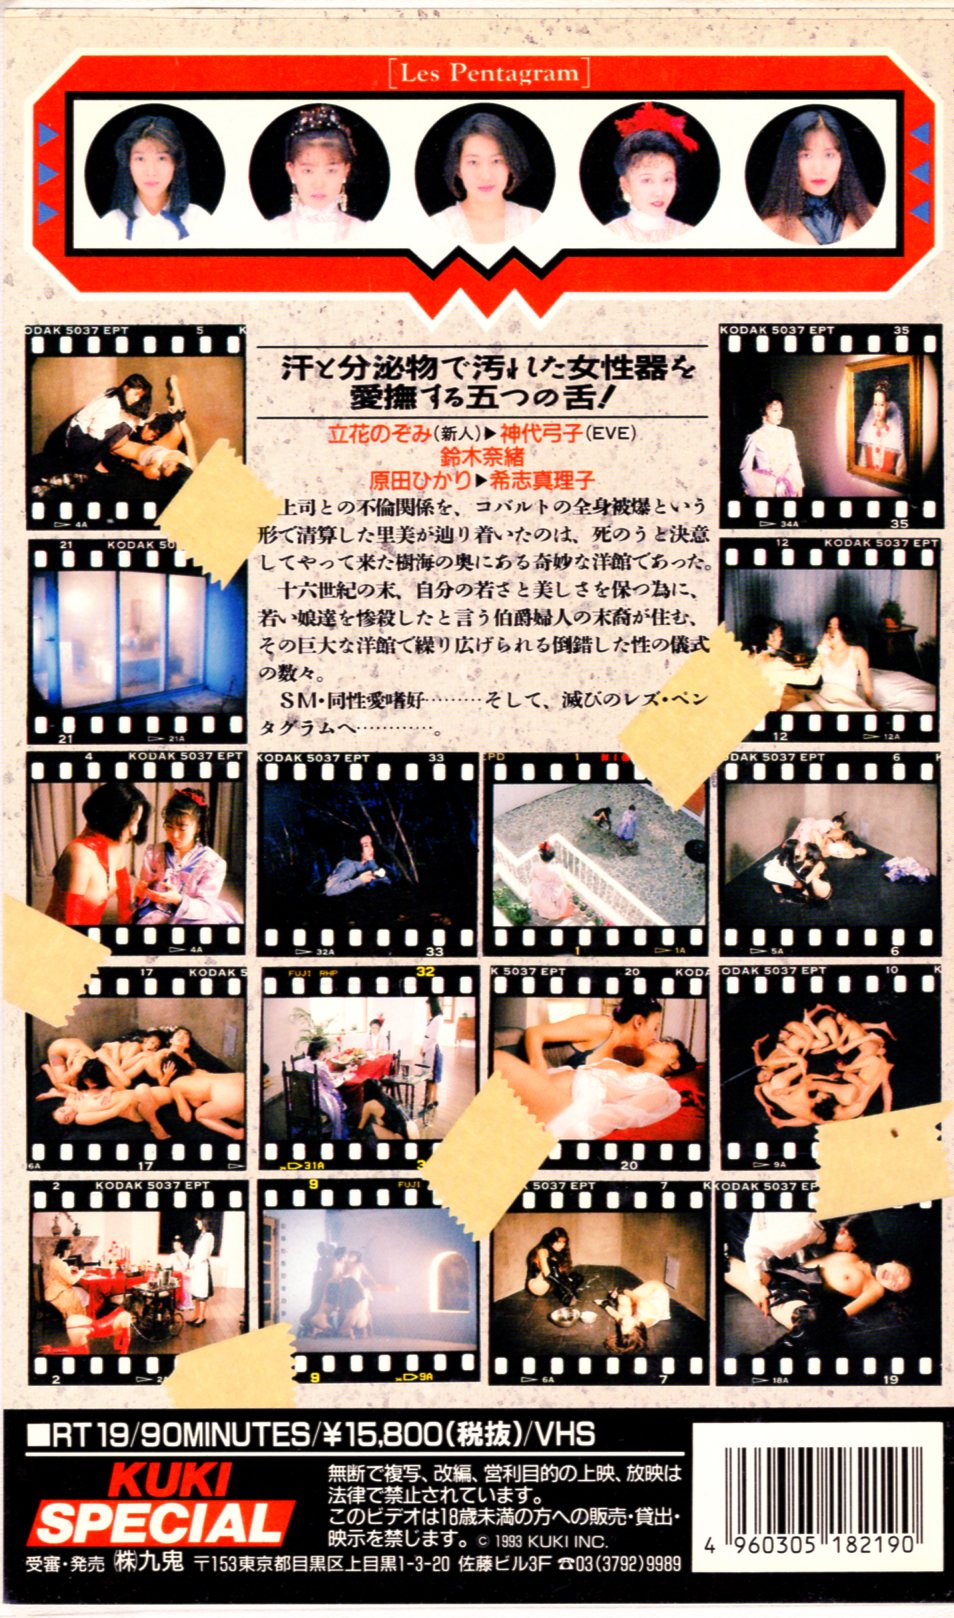 Kuki Adult VHS Yumiko Suzuki Hikari Harada Lesbian Pentagram 